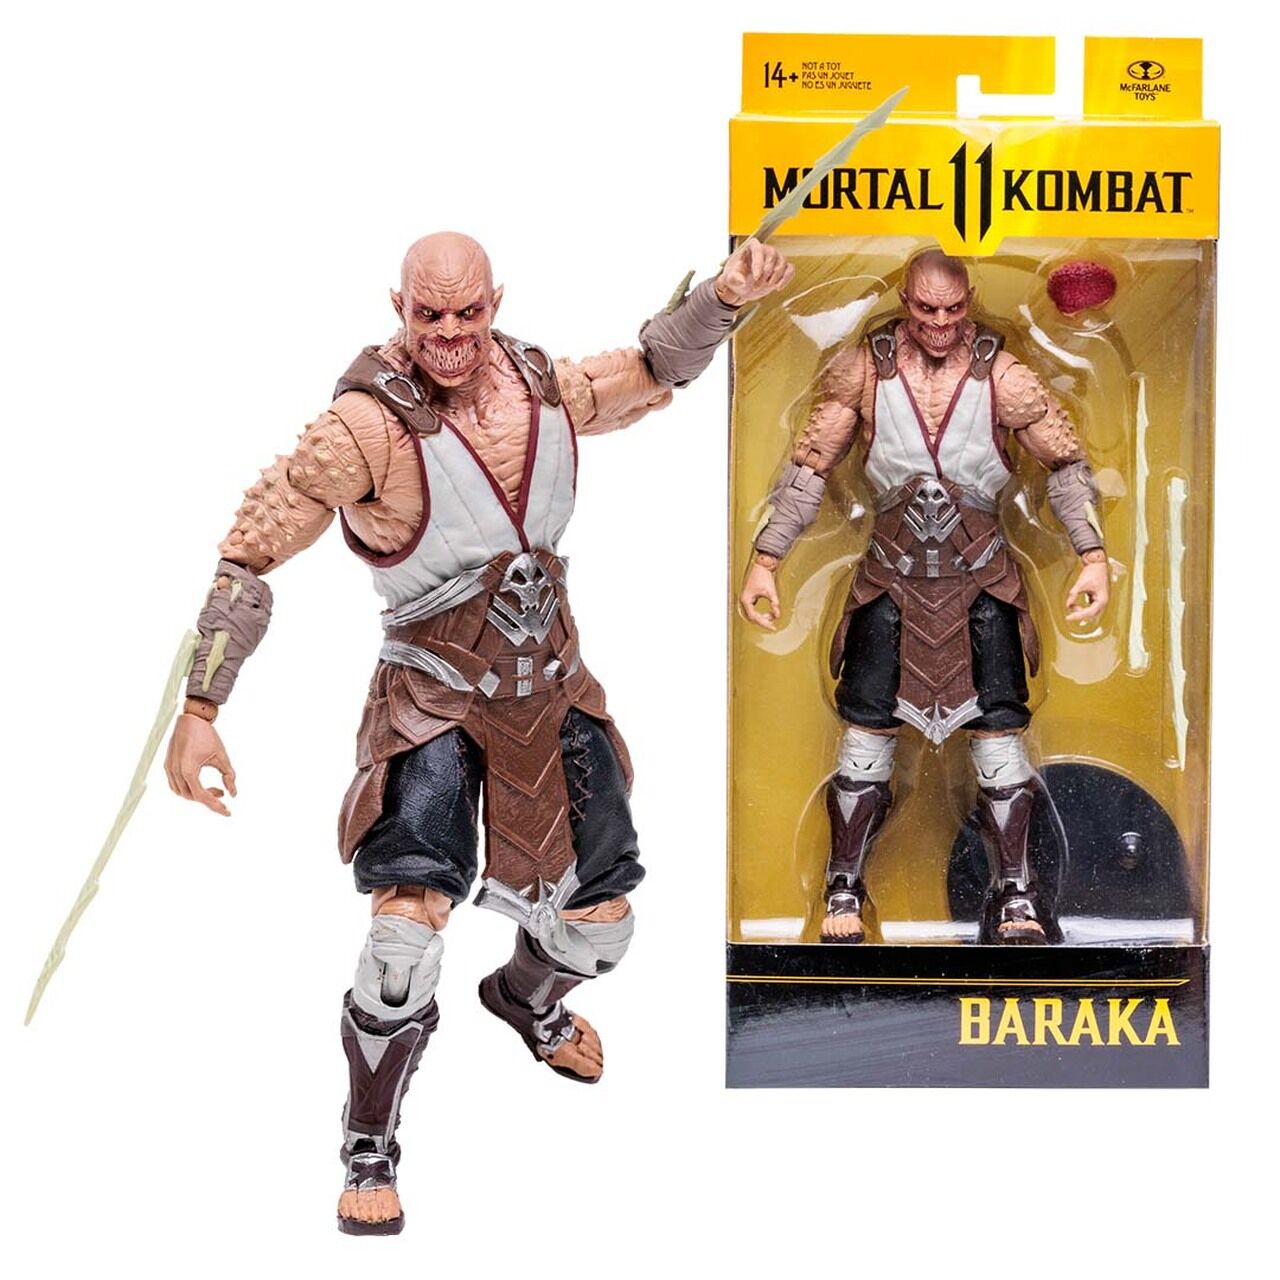 Figura Baraka Mortal Kombat 17cm. de MCFARLANE TOYS - Frikibase.com